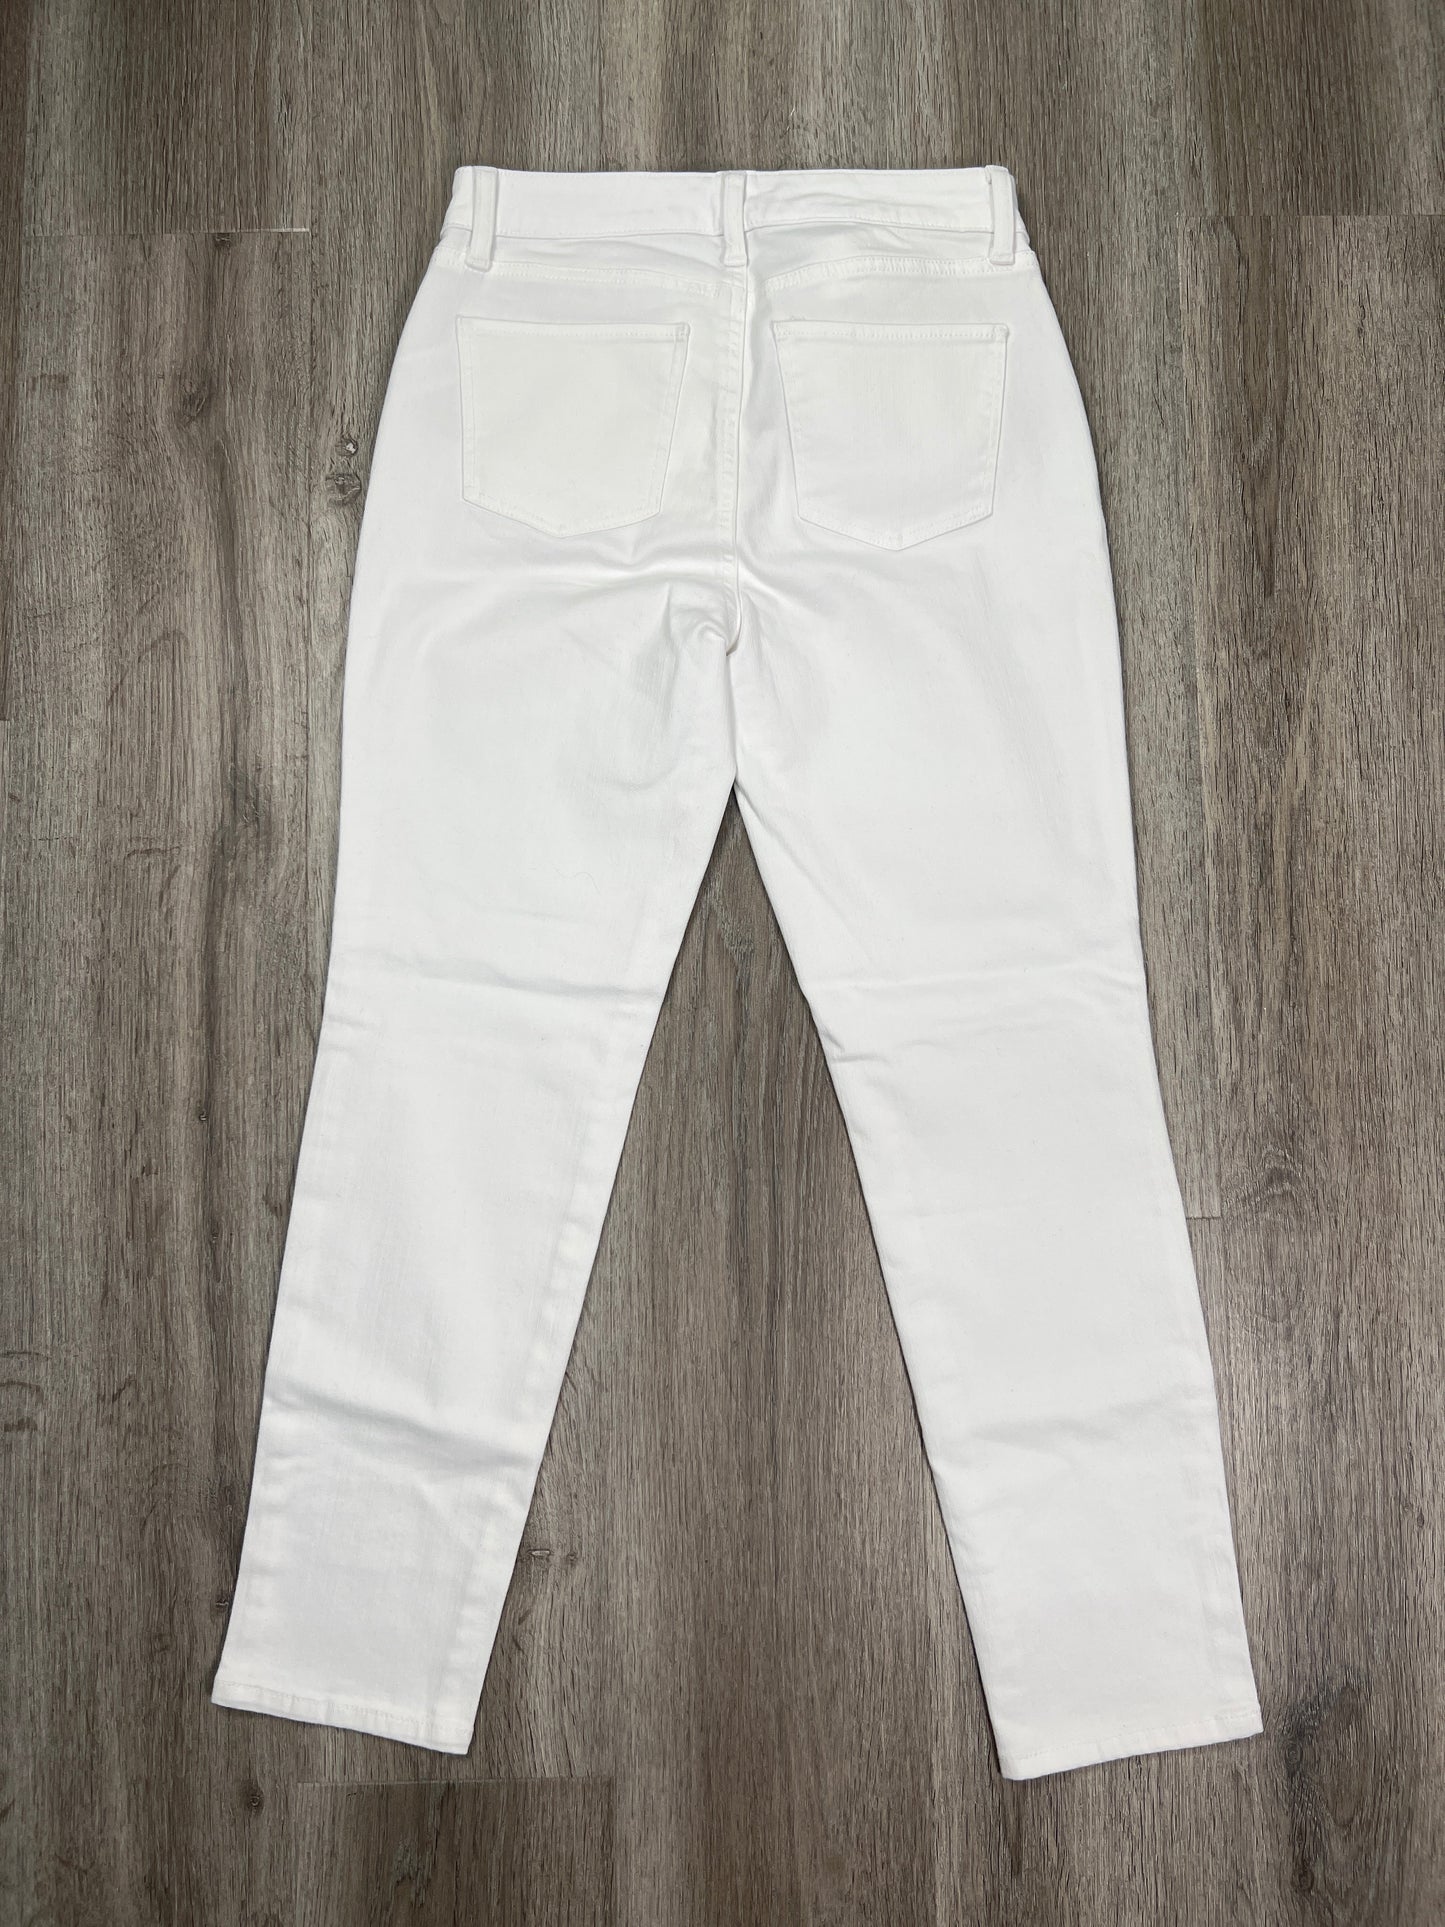 White Pants Chinos & Khakis Talbots, Size 4petite